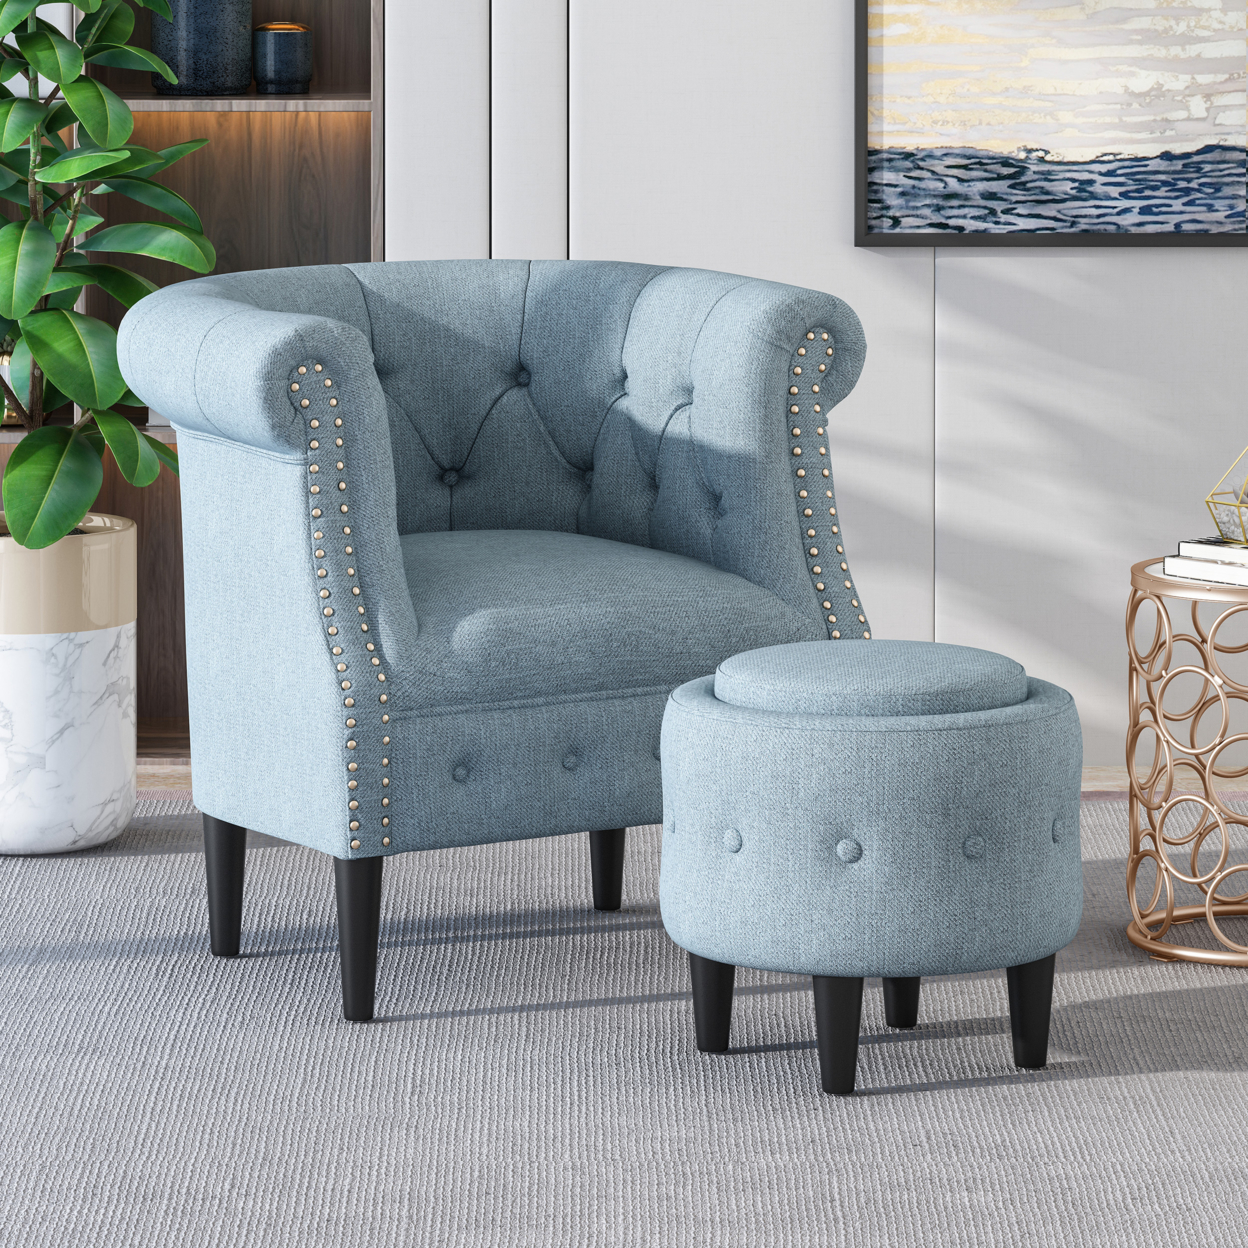 Leila Petite Tufted Fabric Chair And Ottoman Set - Light Blue + Dark Brown